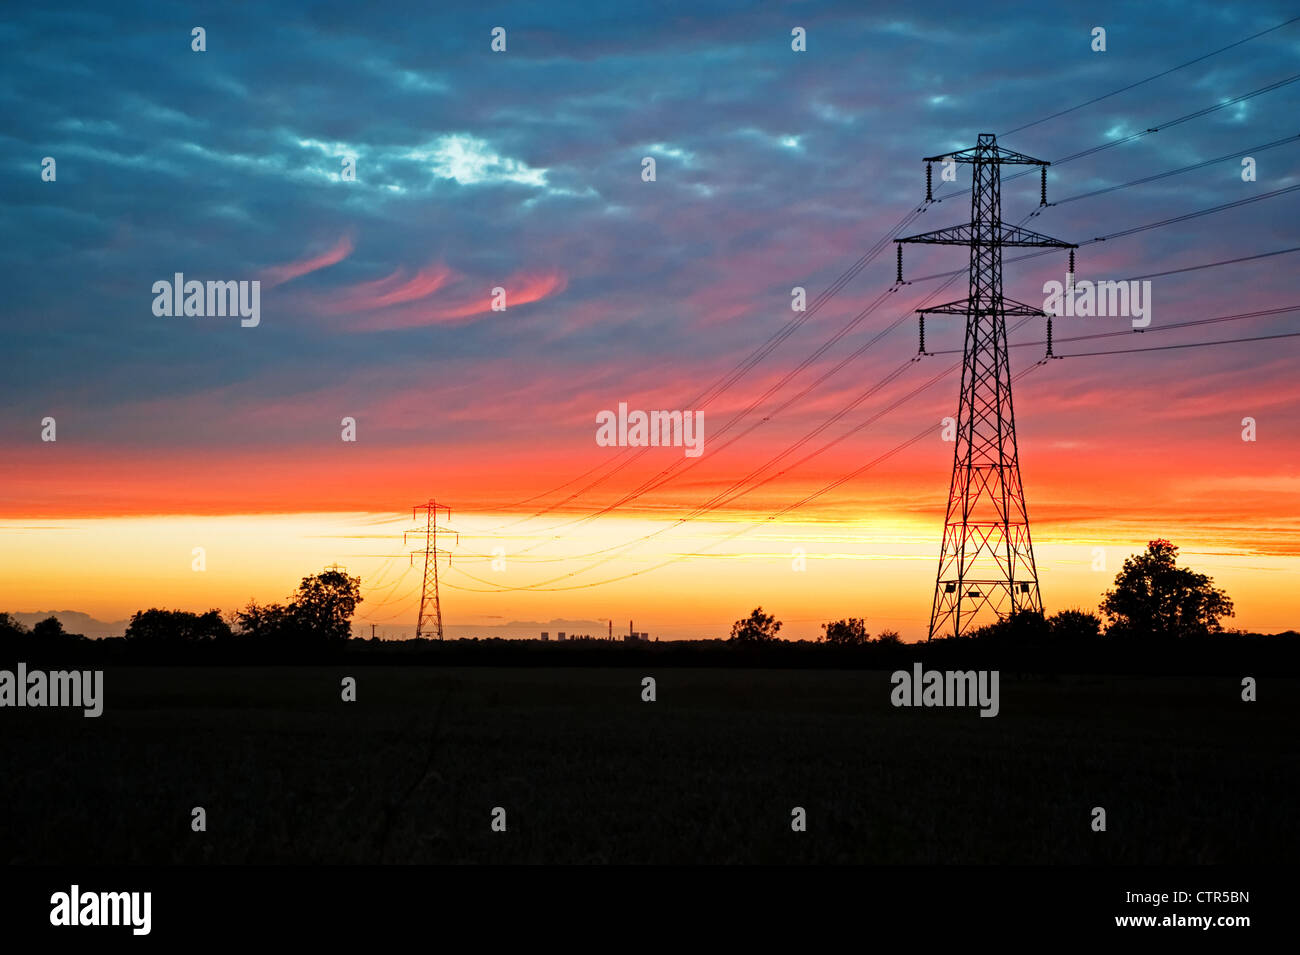 Sonnenuntergang mit Strom Pylon Silhouetten, Lincolnshire, UK. Stockfoto